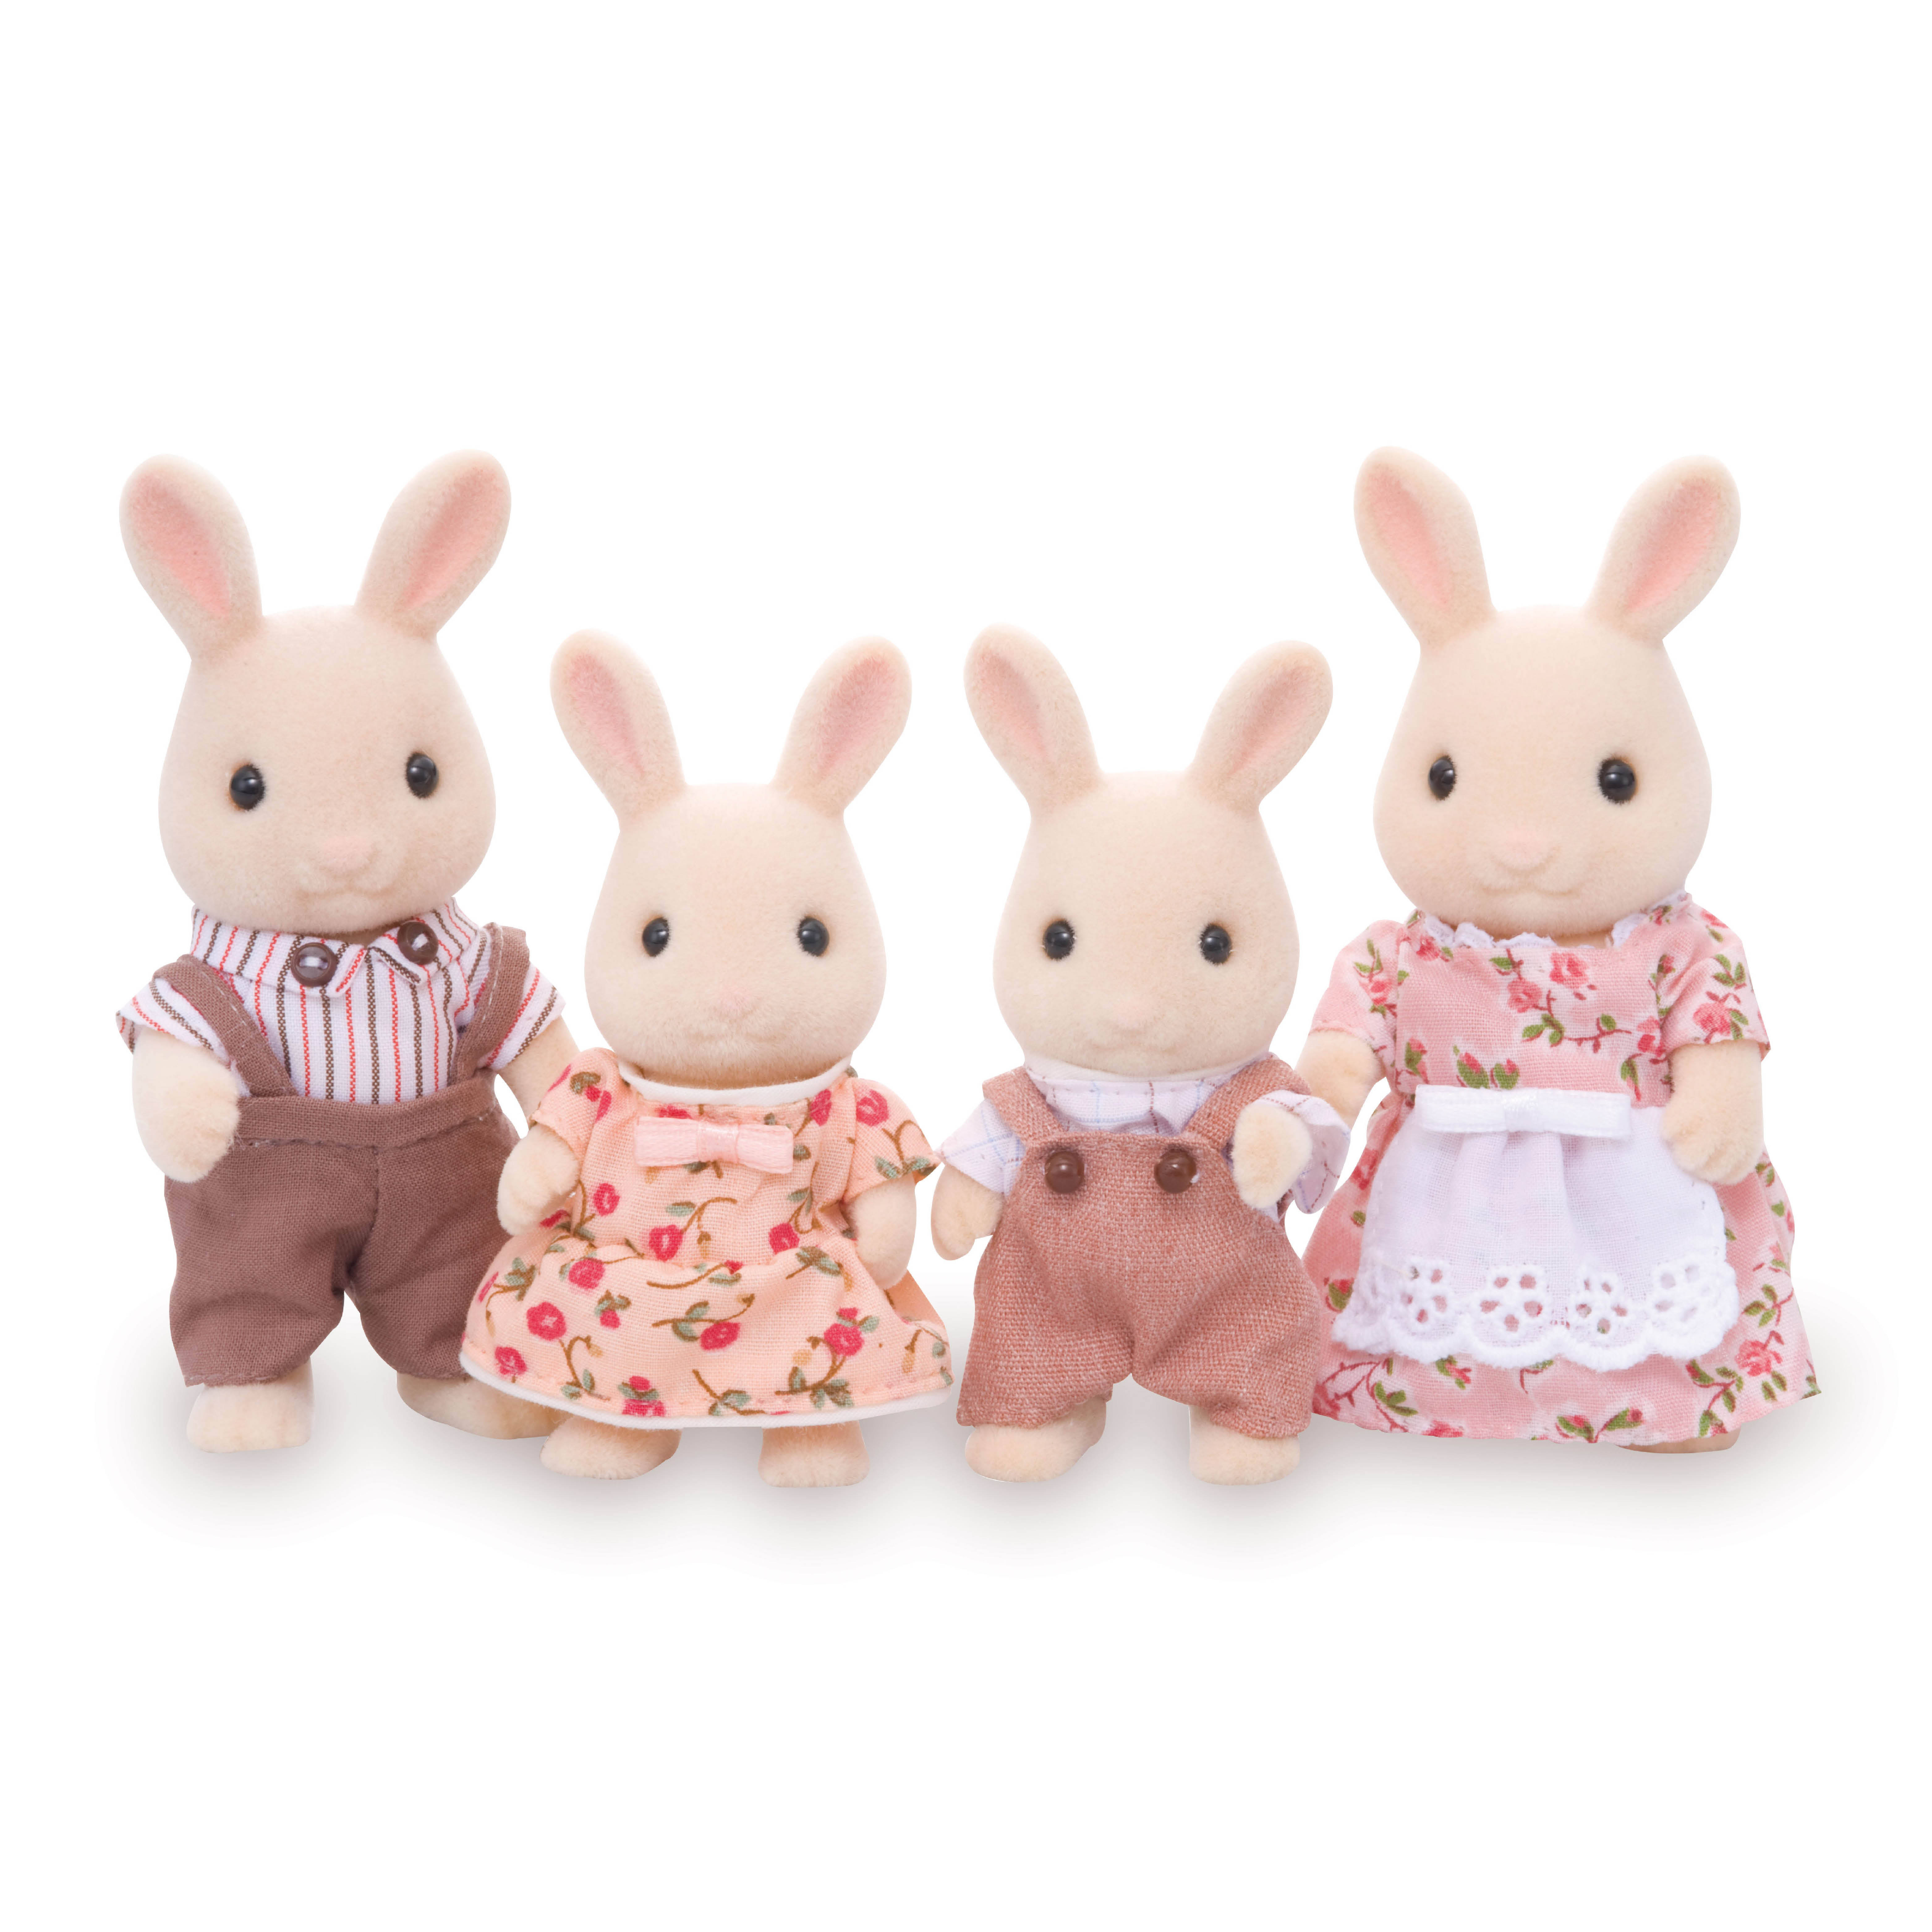 Calico Critters Sweetpea Rabbit Family Dolls Set